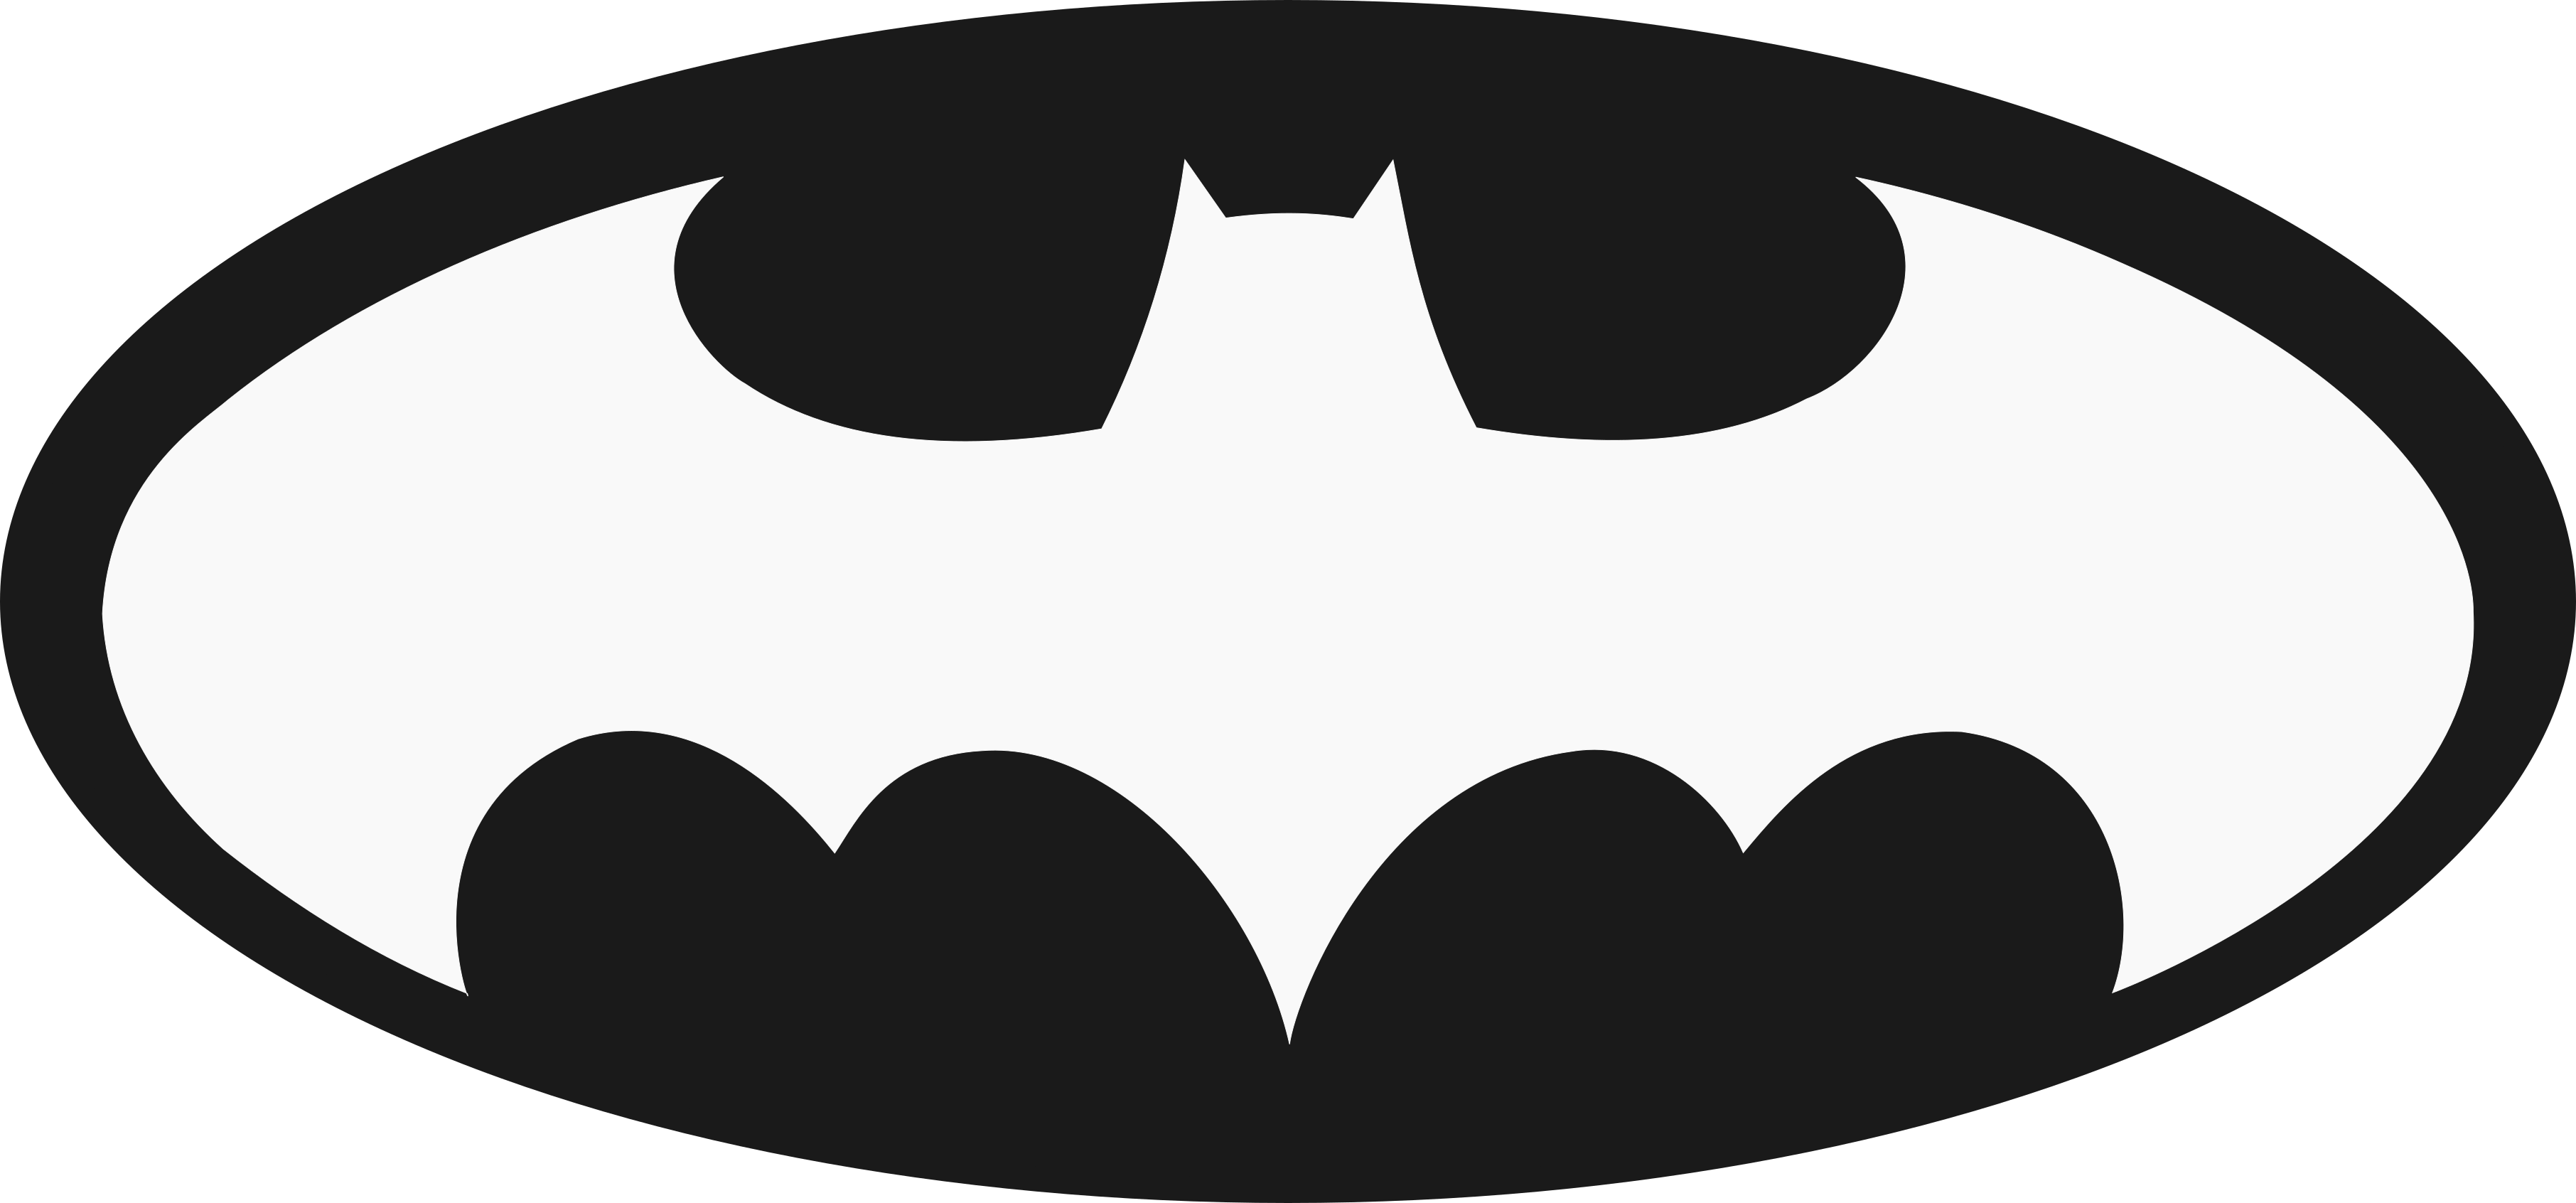 Logo De Batman Vector - ClipArt Best